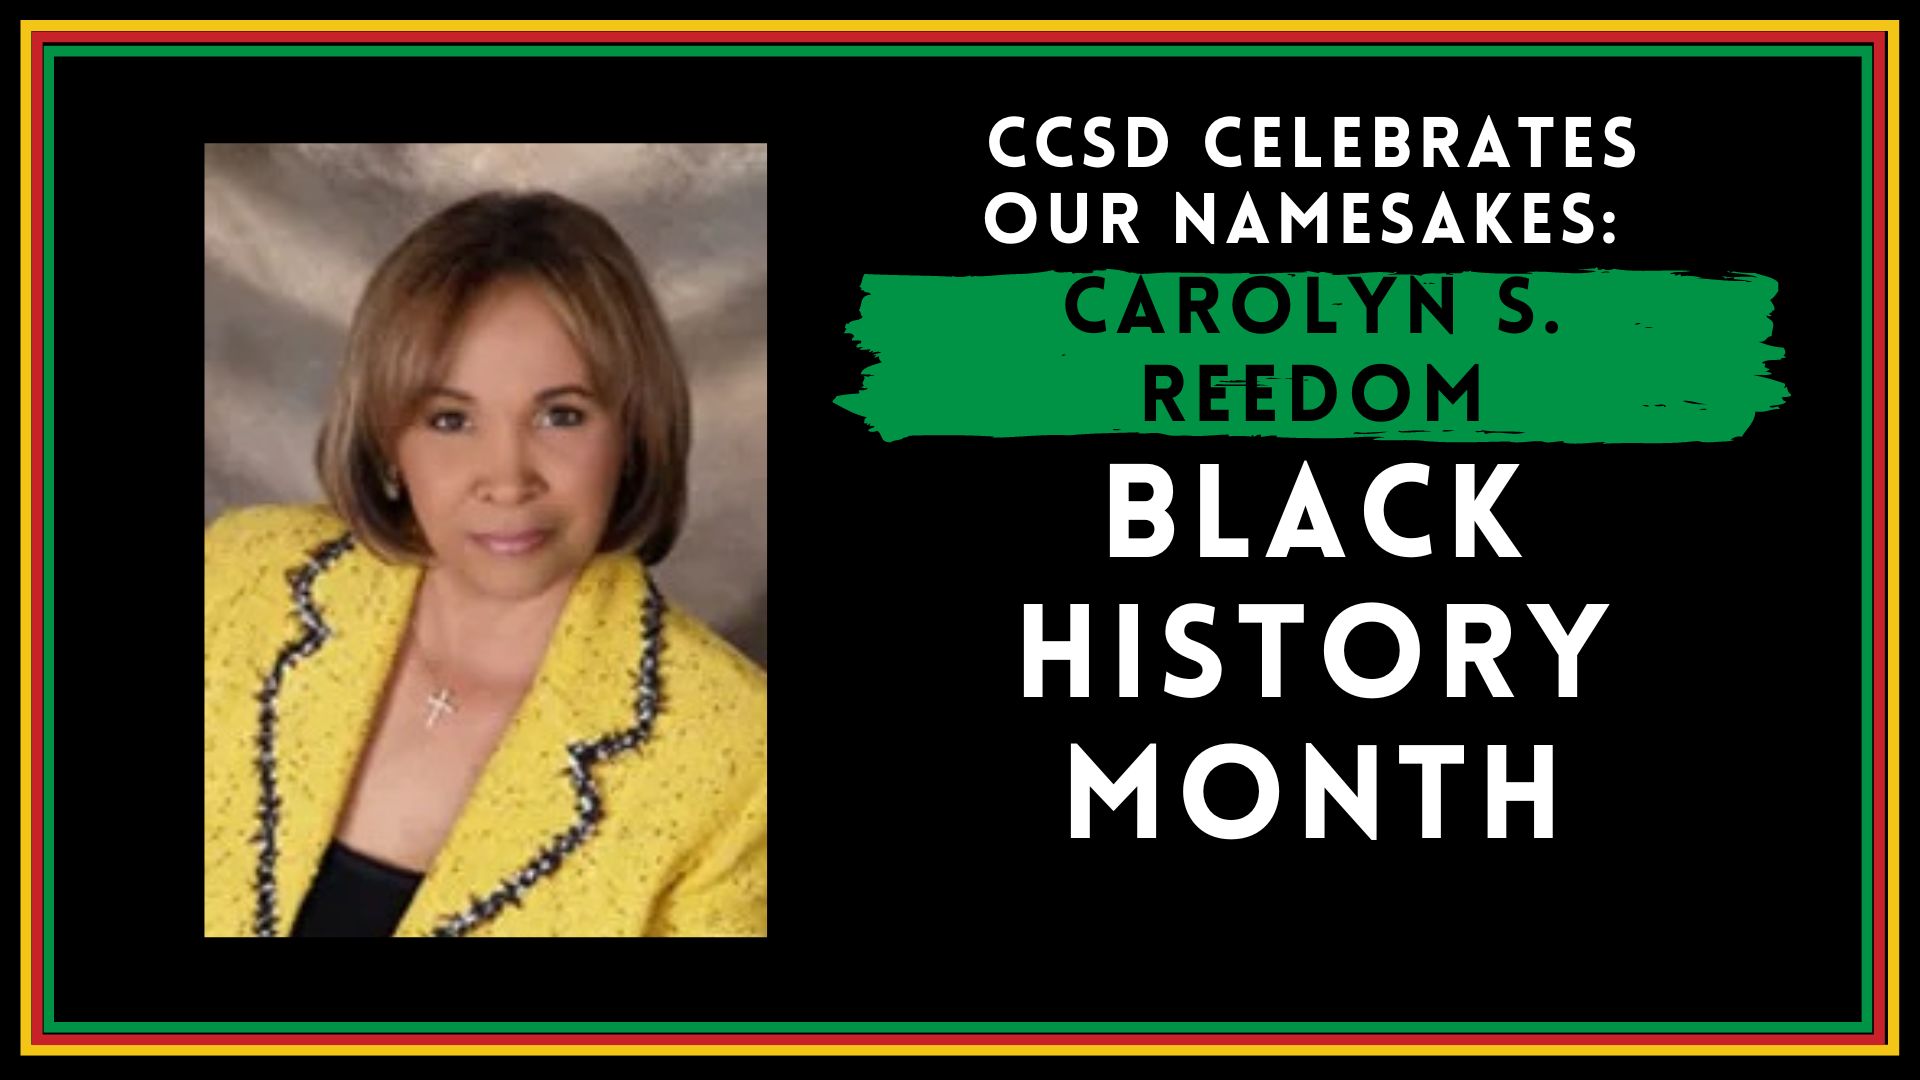 Celebrating CCSD leaders: Dr. Carolyn S. Reedom